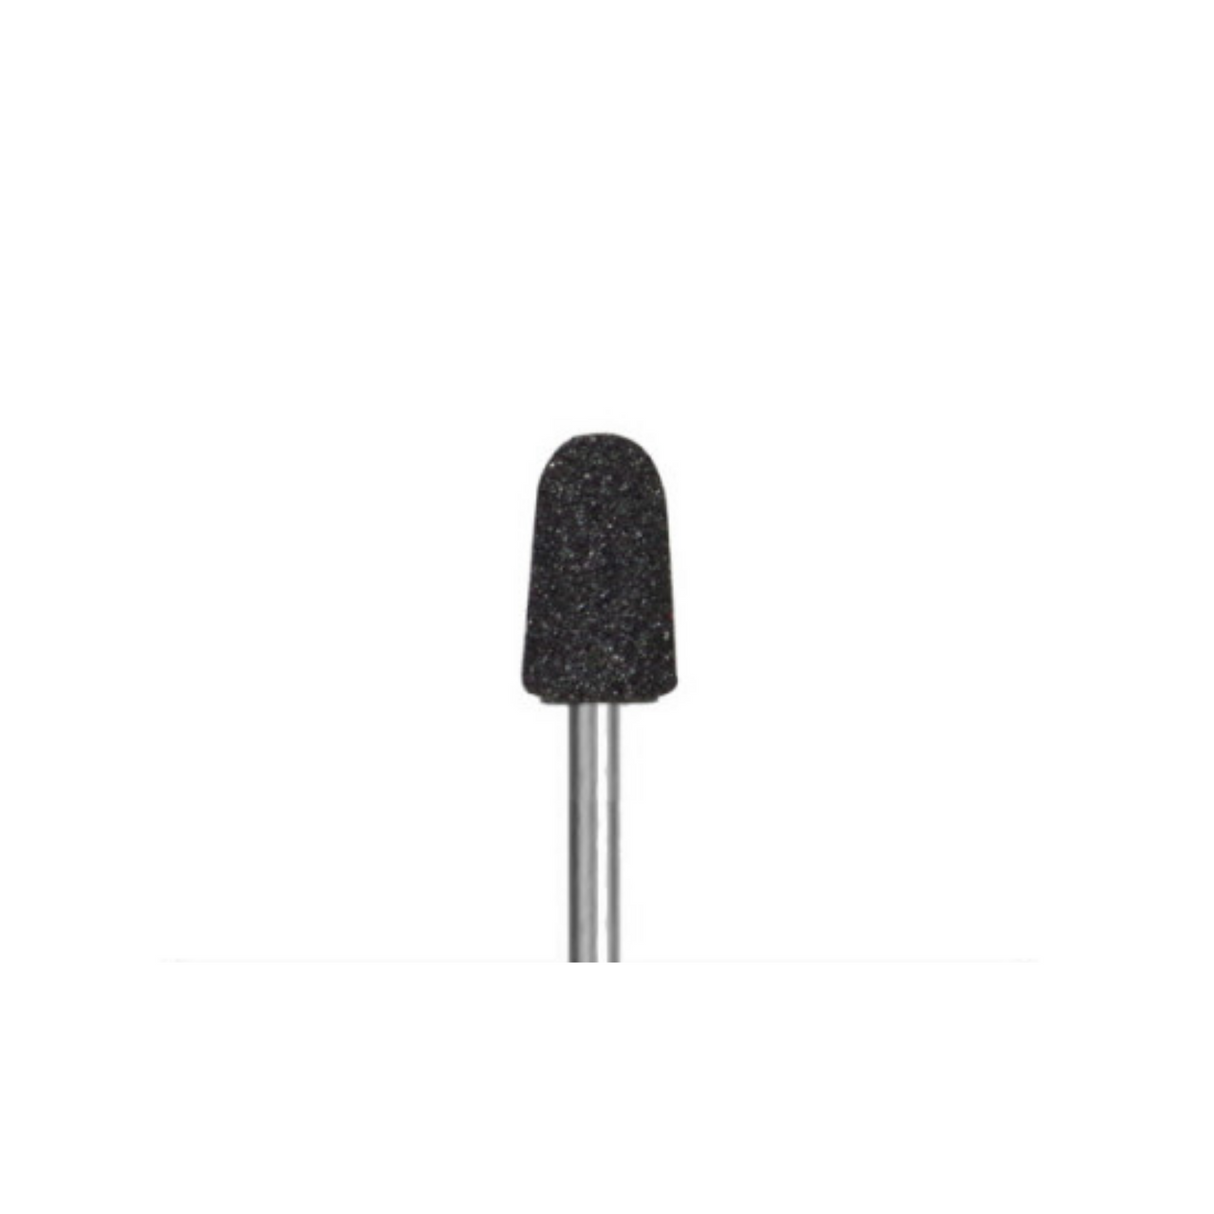 Pedice abrasives Medium coarse, Black 10mm | 10/20 pcs